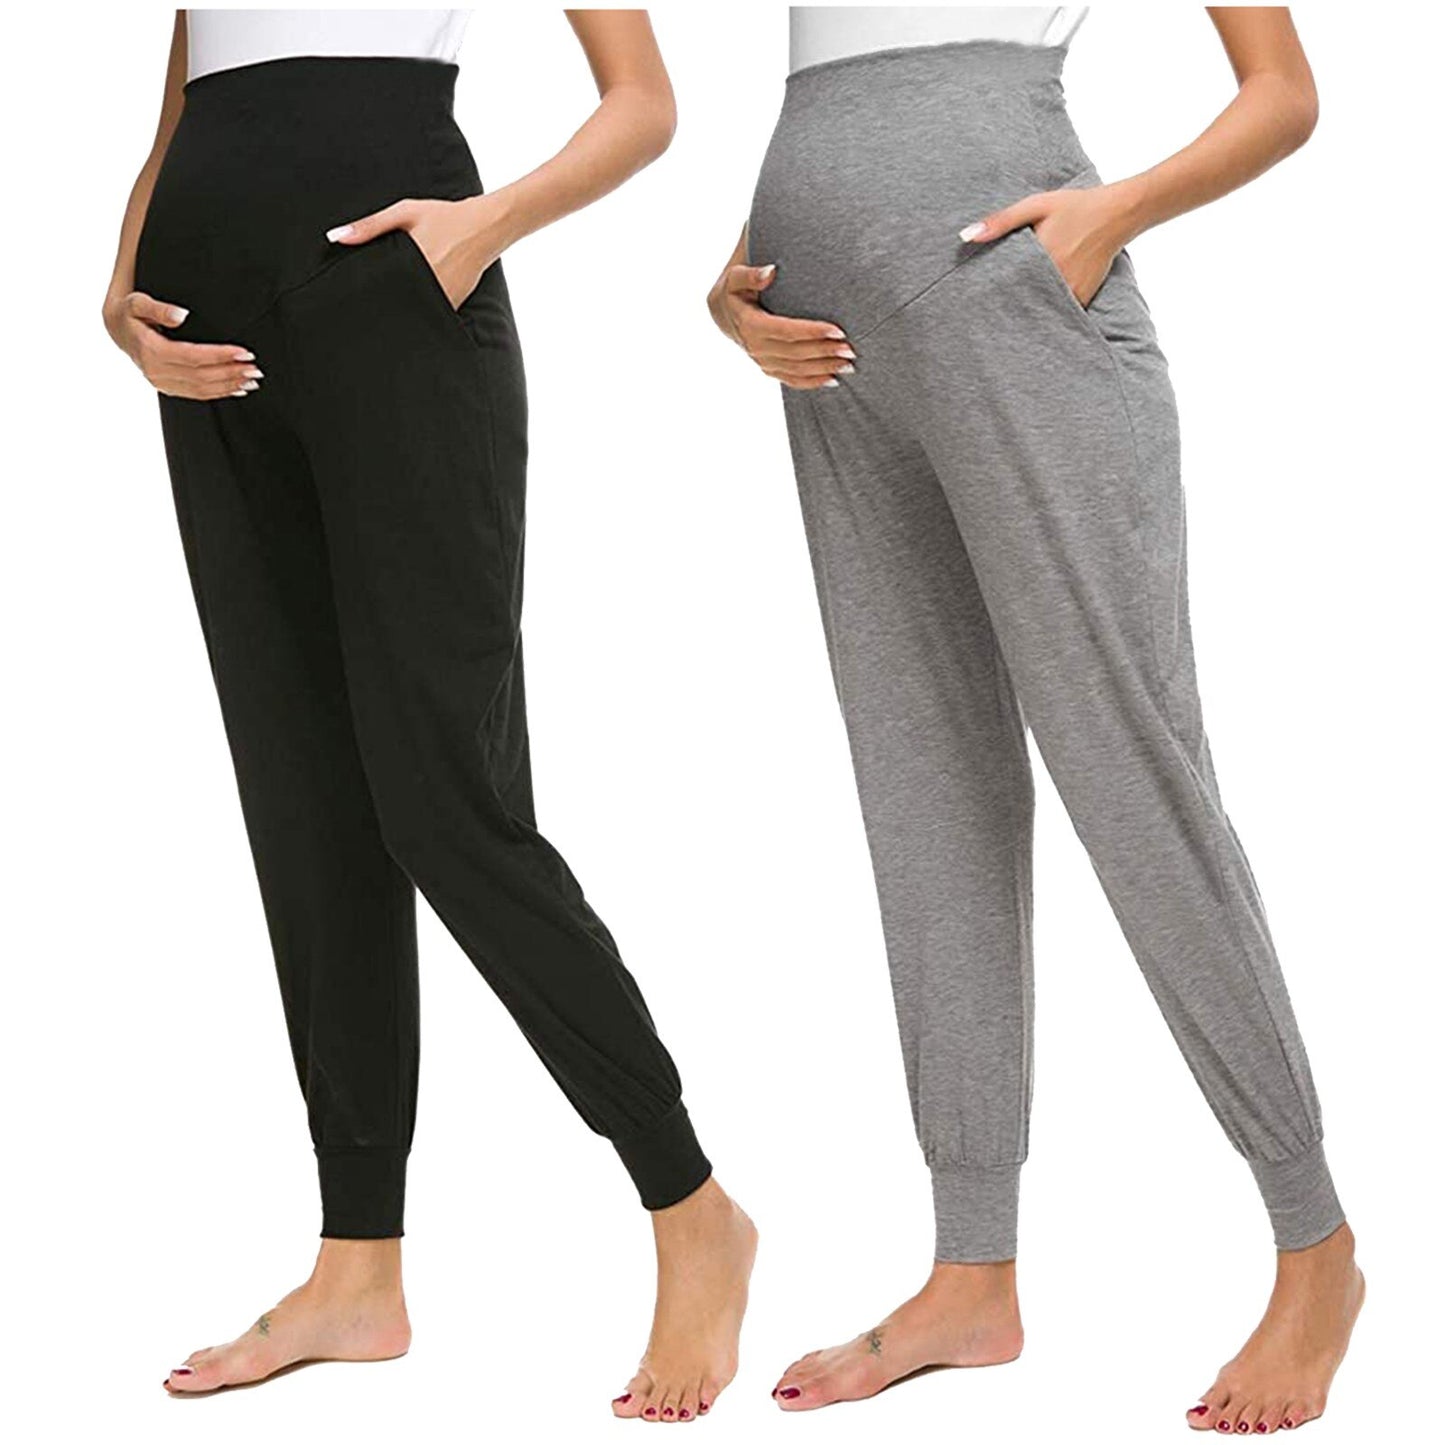 GOOKALA Postpartum Pants,Pack of 10 Maternity Pants After Birth